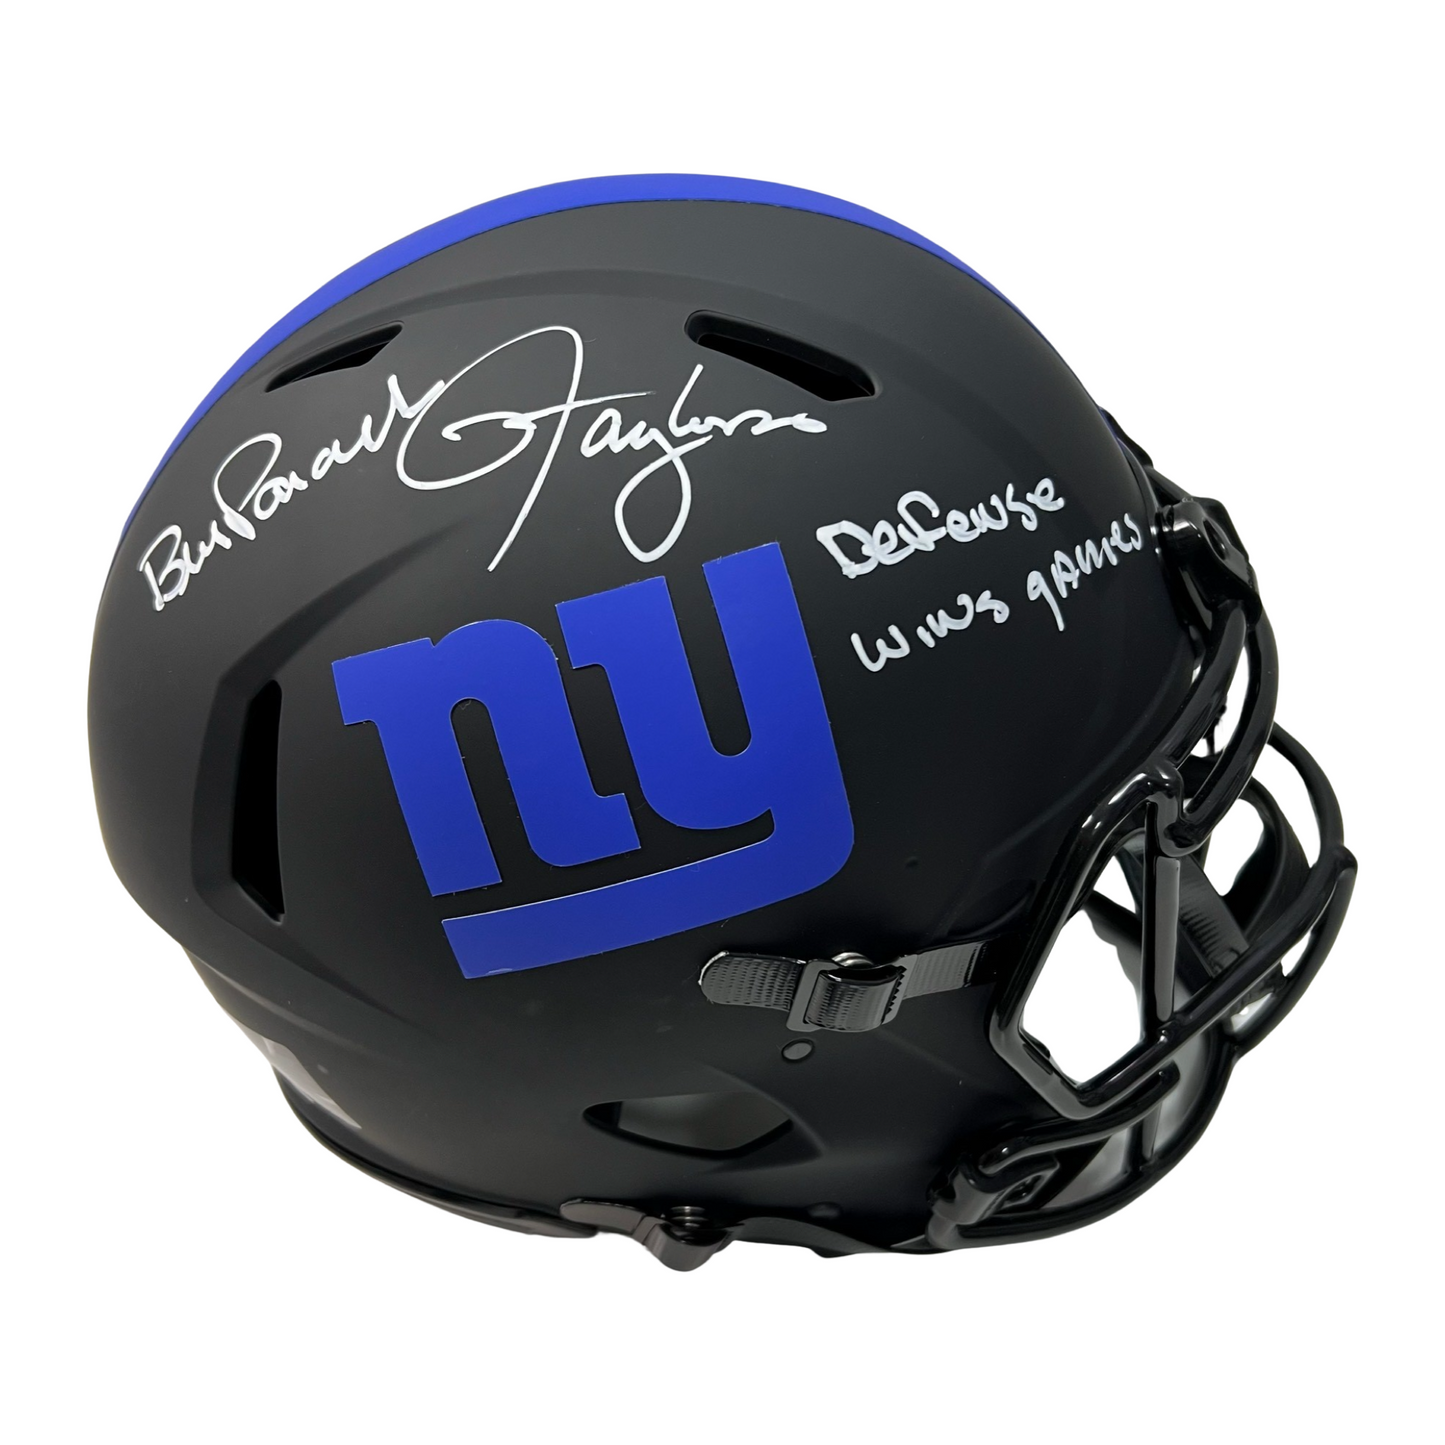 Lawrence Taylor & Bill Parcells Autographed New York Giants Eclipse Authentic Helmet “Defense Wins Games” Inscription Steiner CX